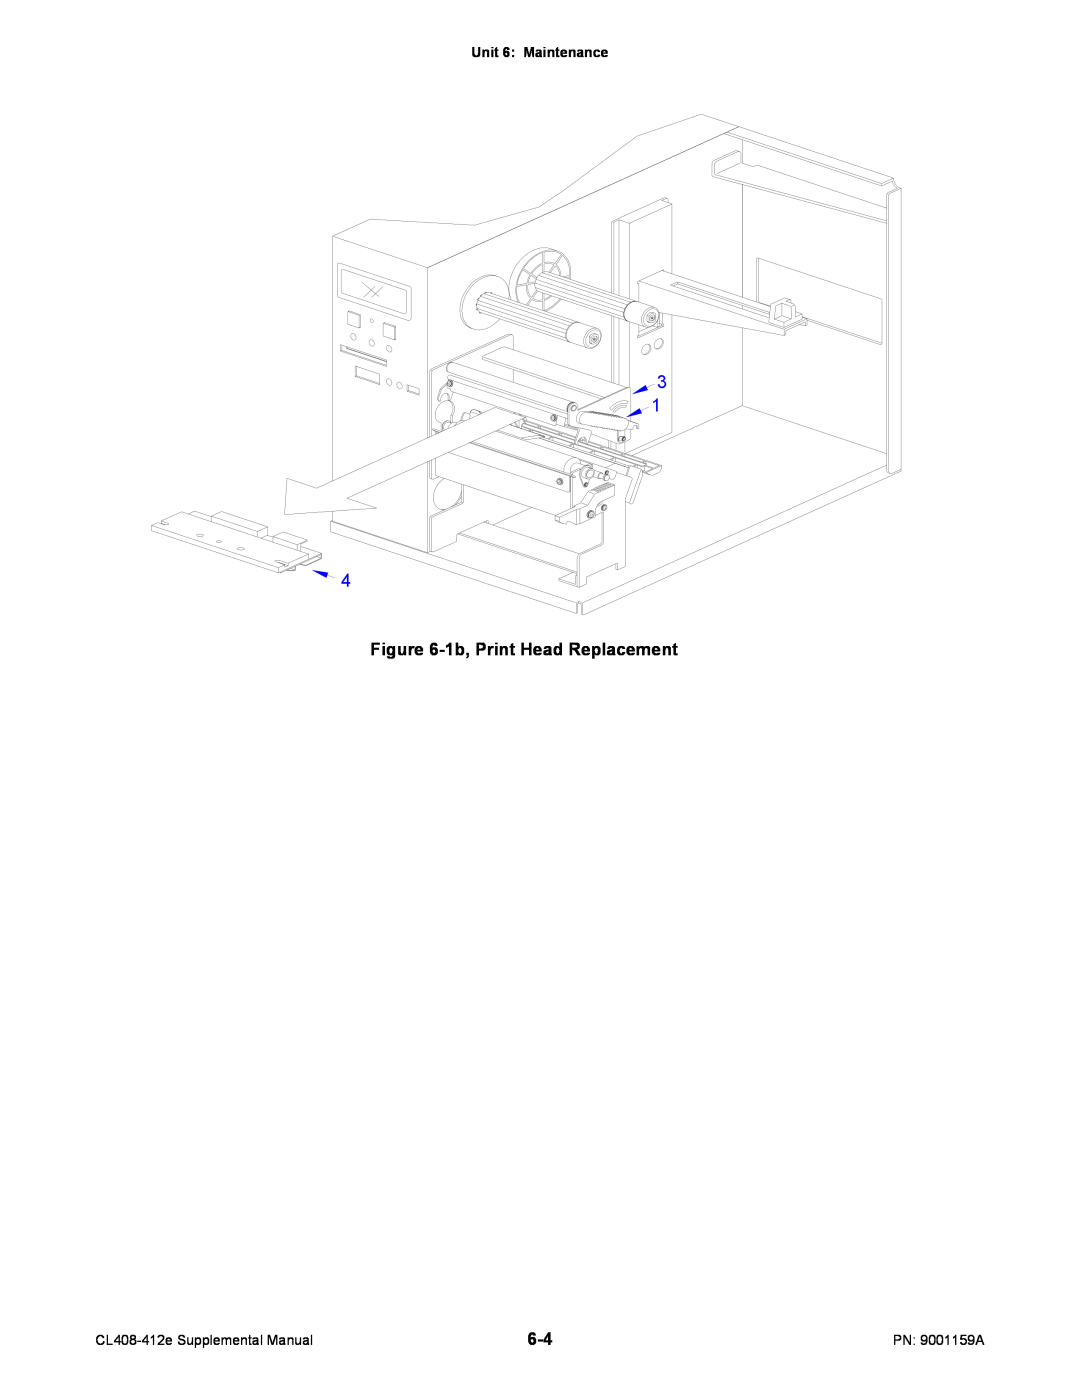 SATO CL408-412e manual 1b, Print Head Replacement, Unit 6 Maintenance 